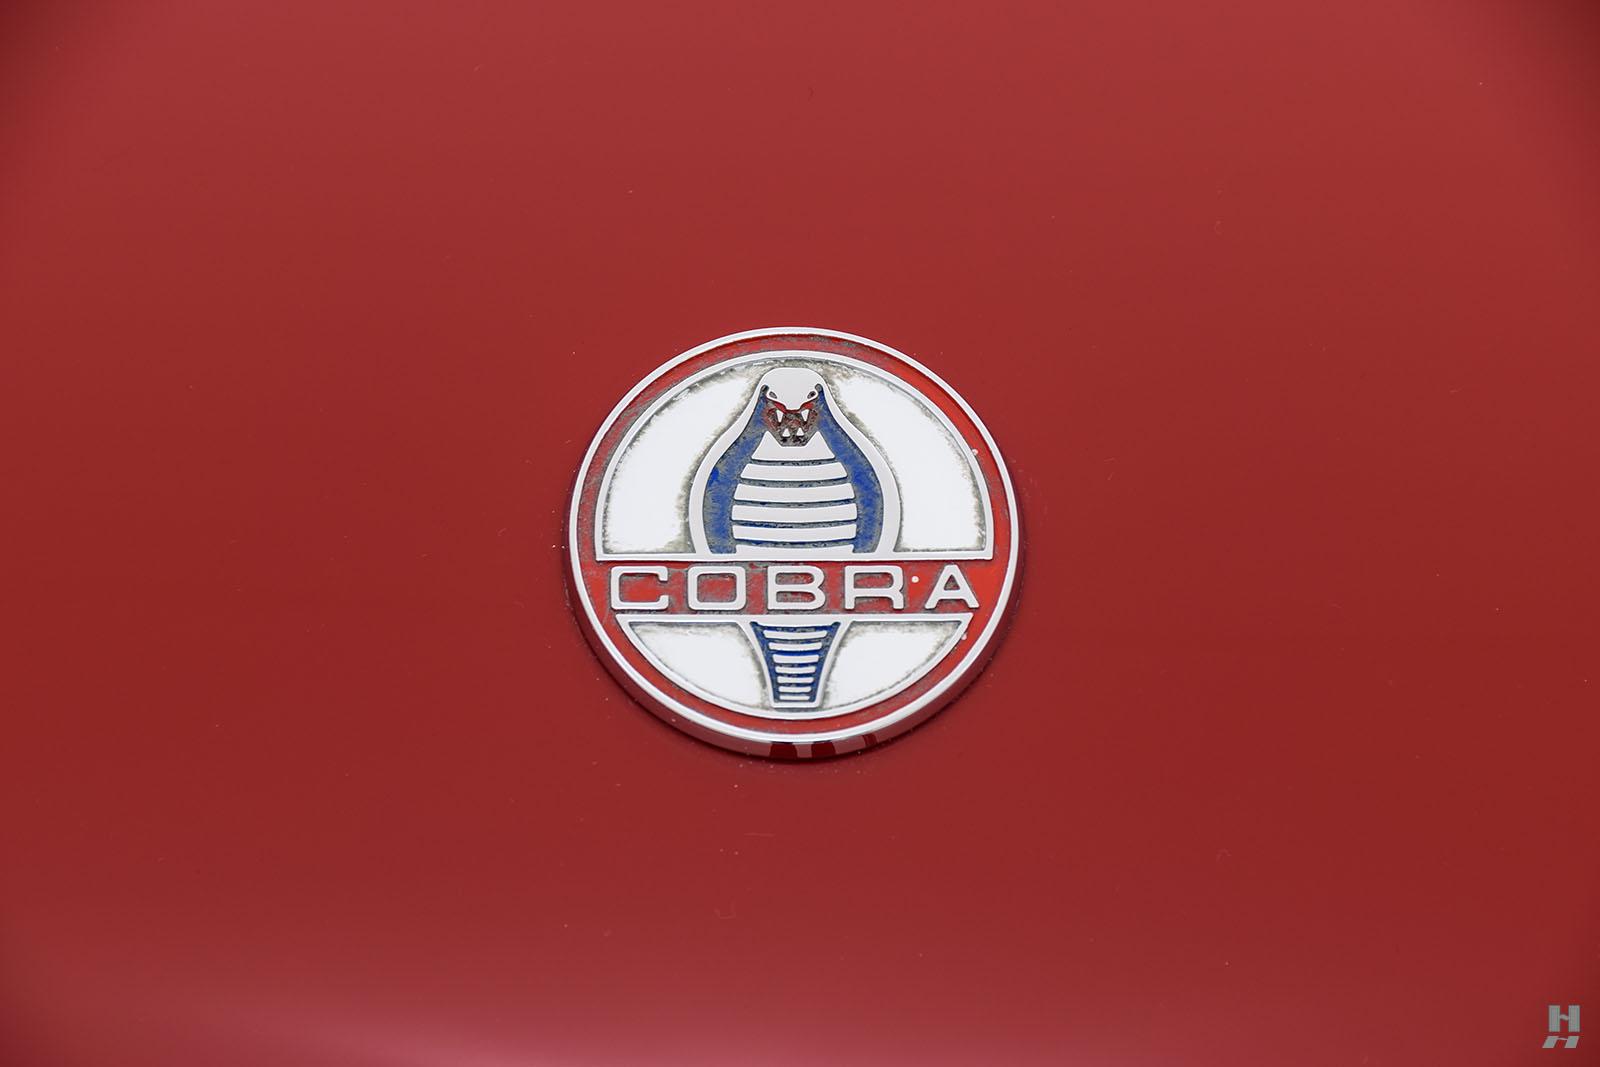 1966 shelby cobra 427 (csx3300 - csx3360)